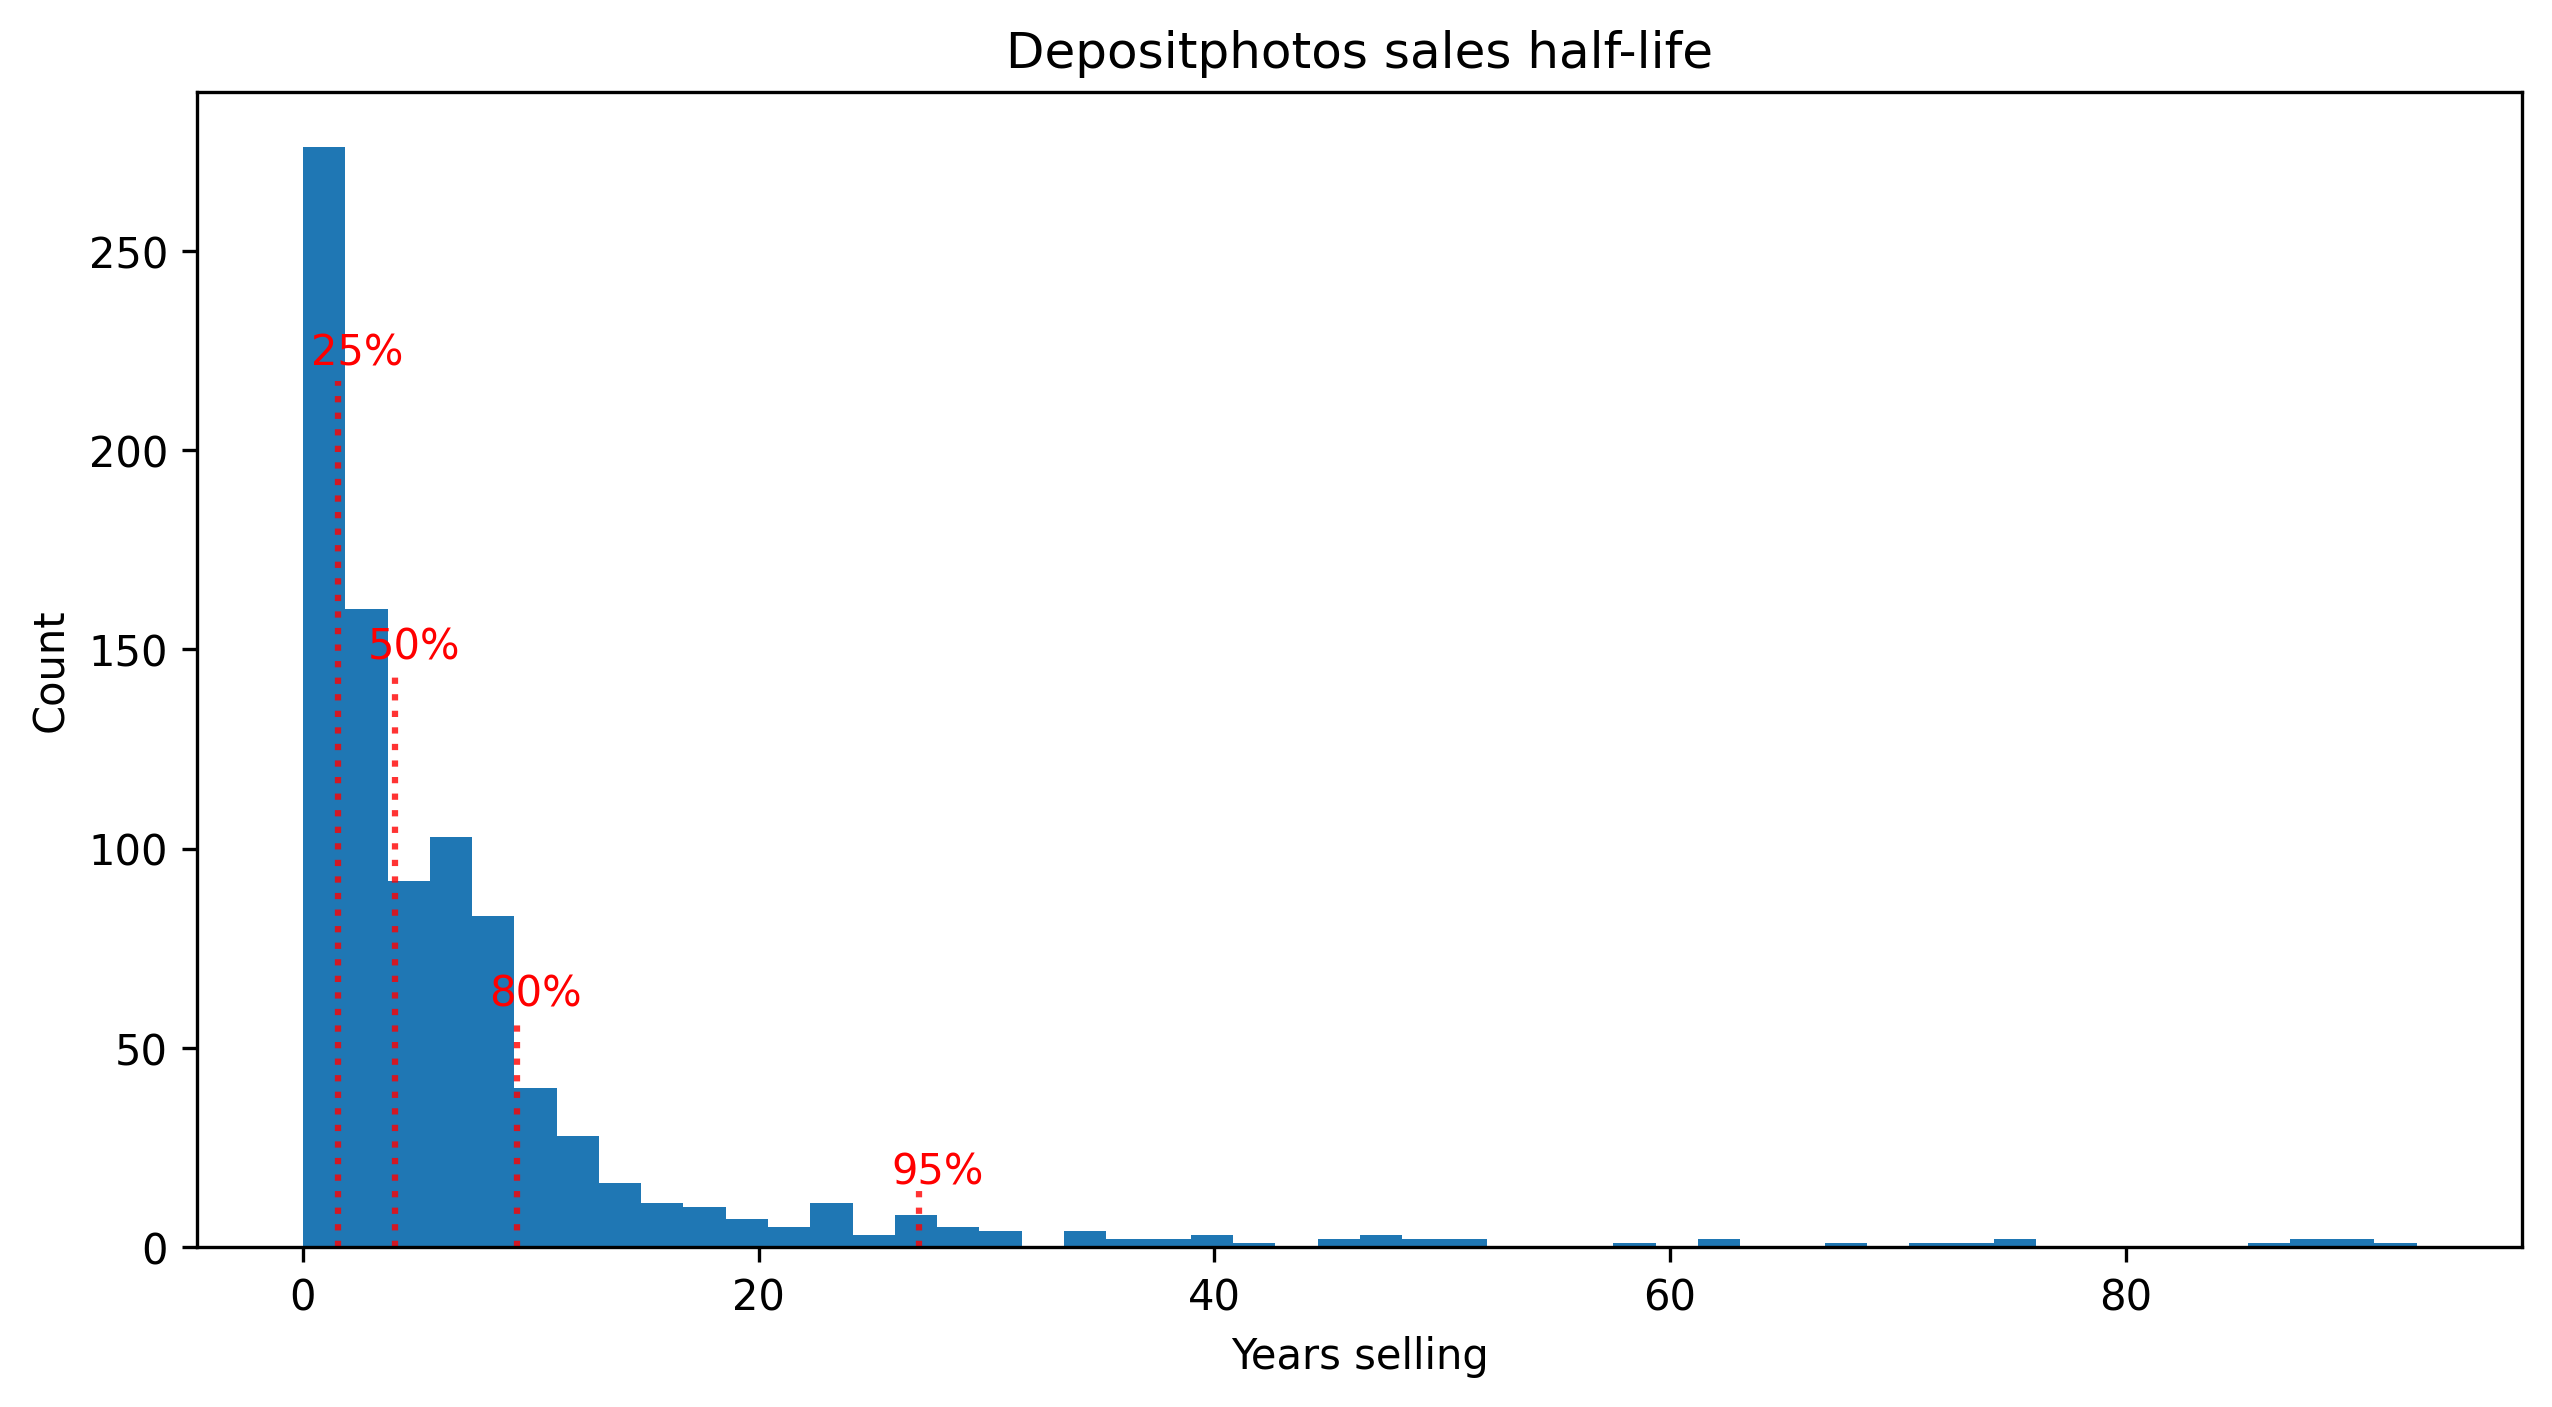 Depositphotos half-life